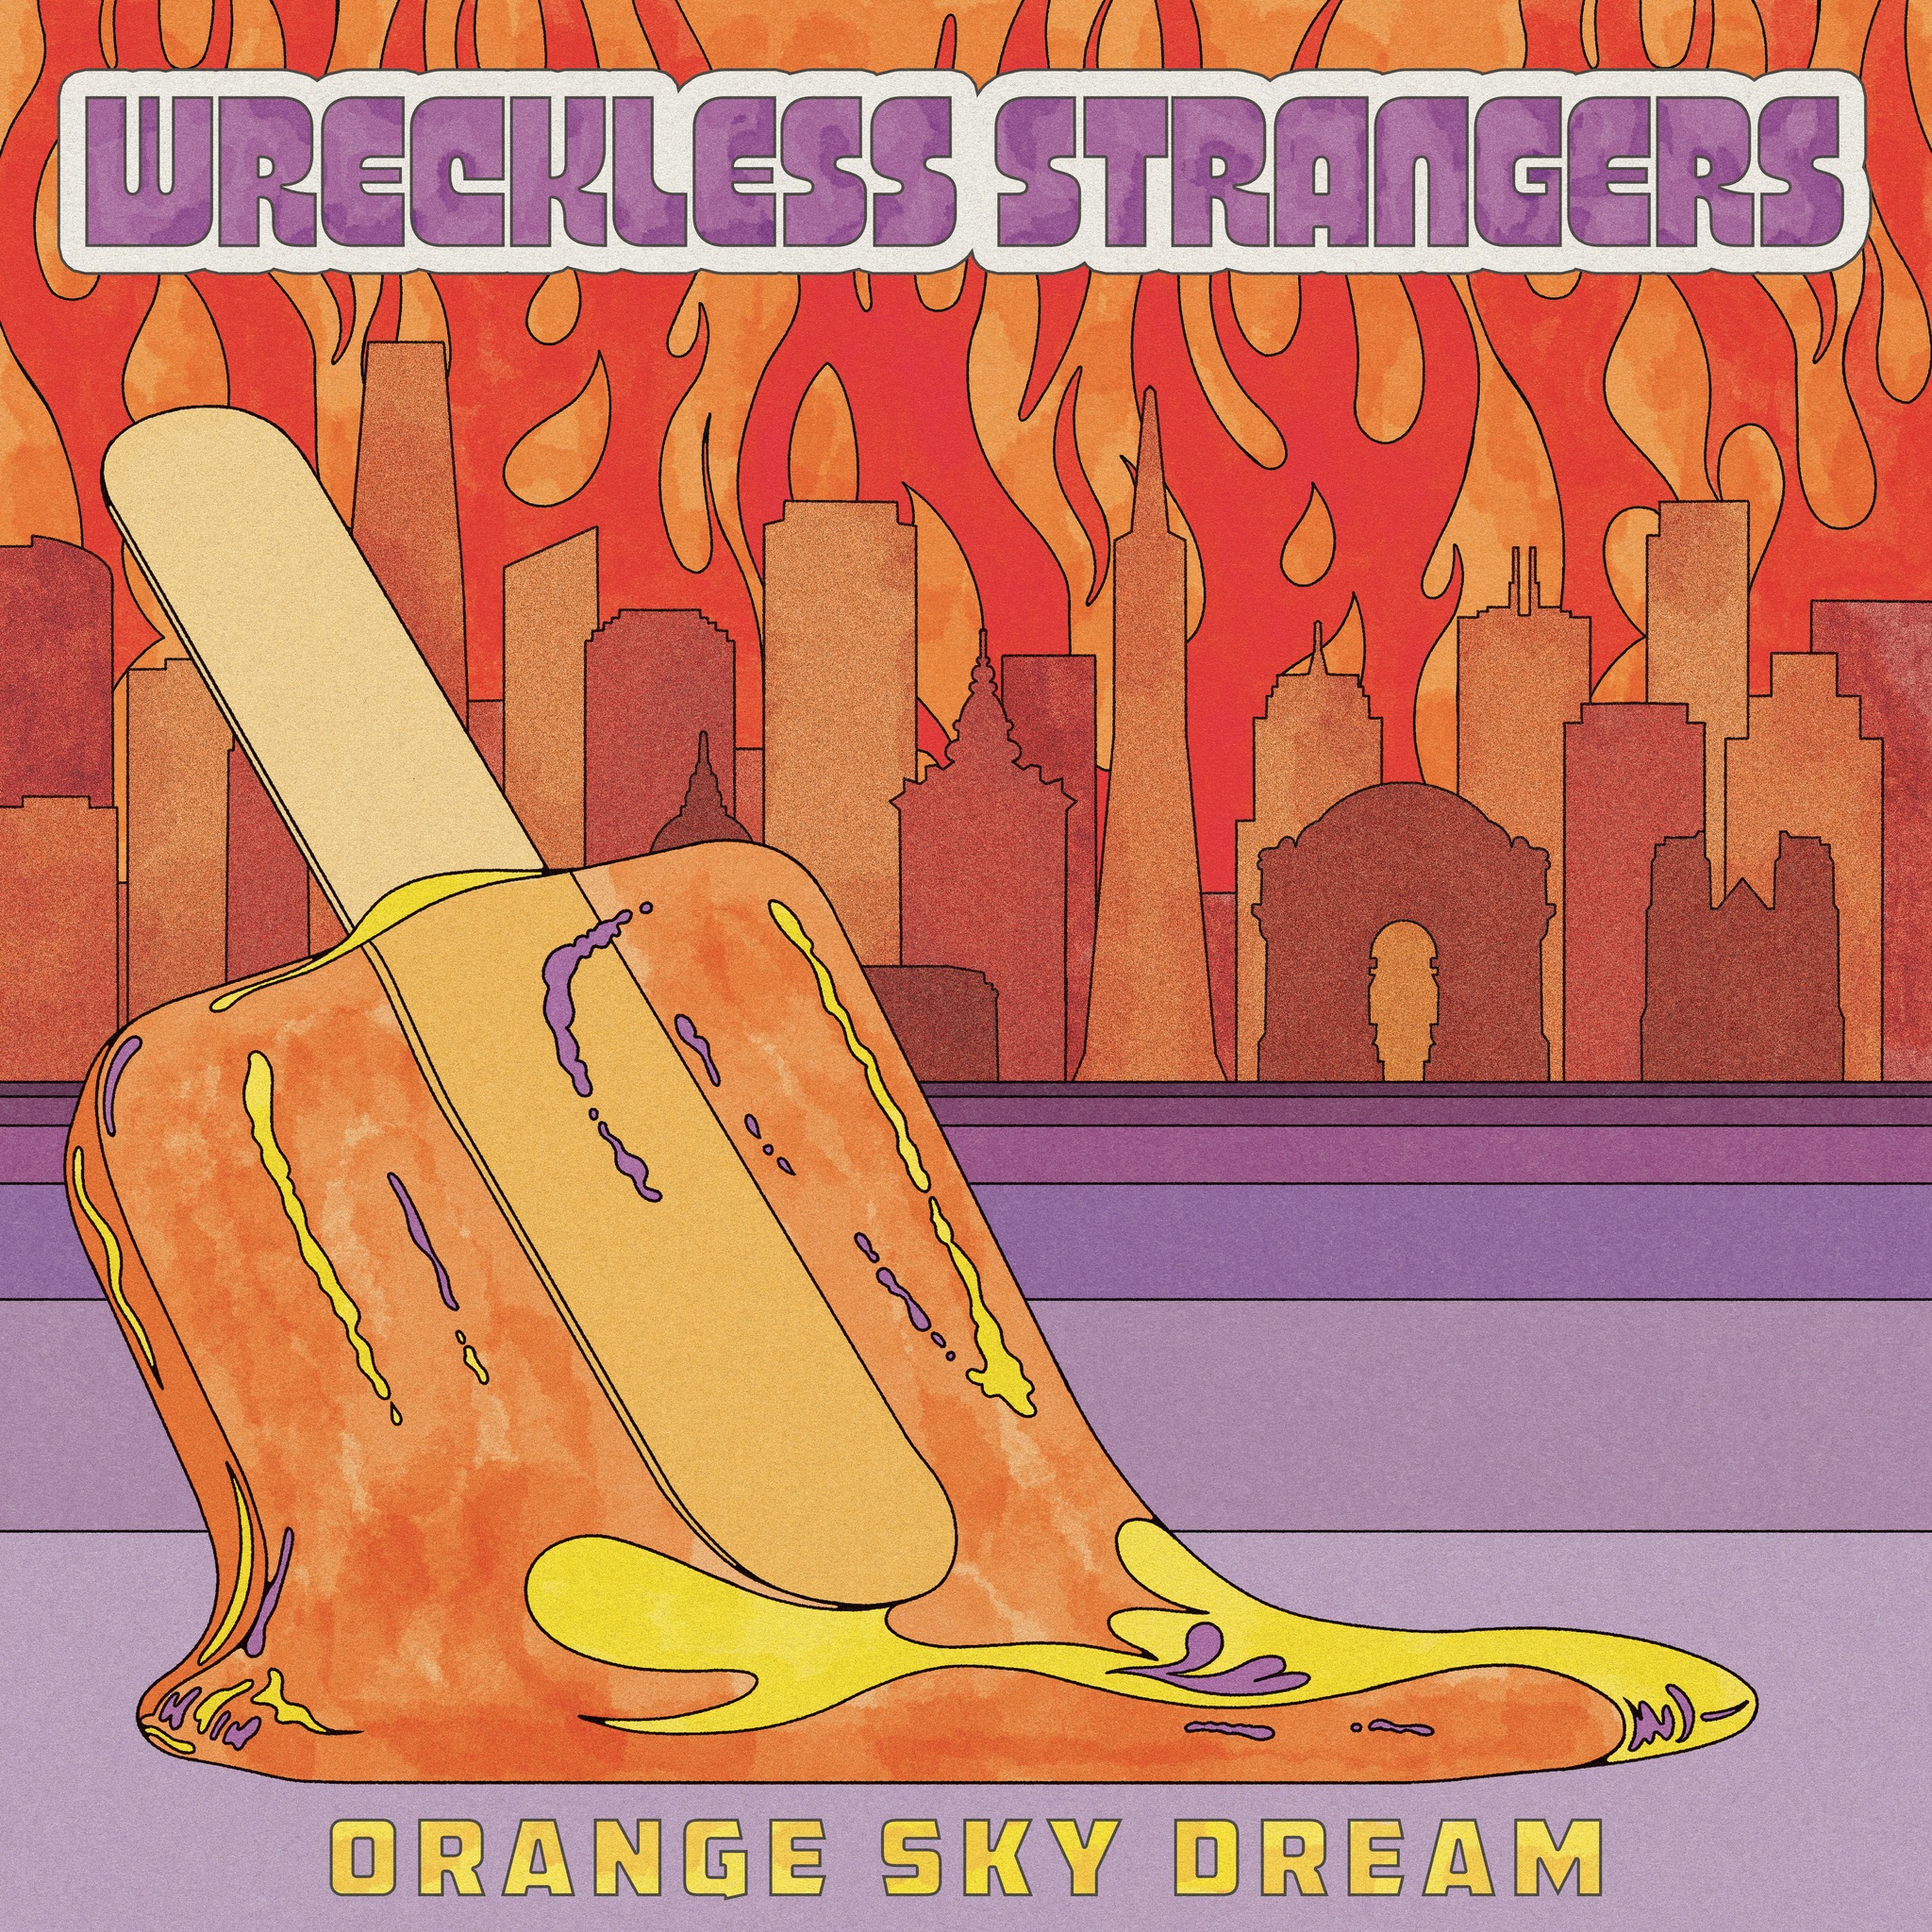 Review: Wreckless Strangers' Orange Sky Dream